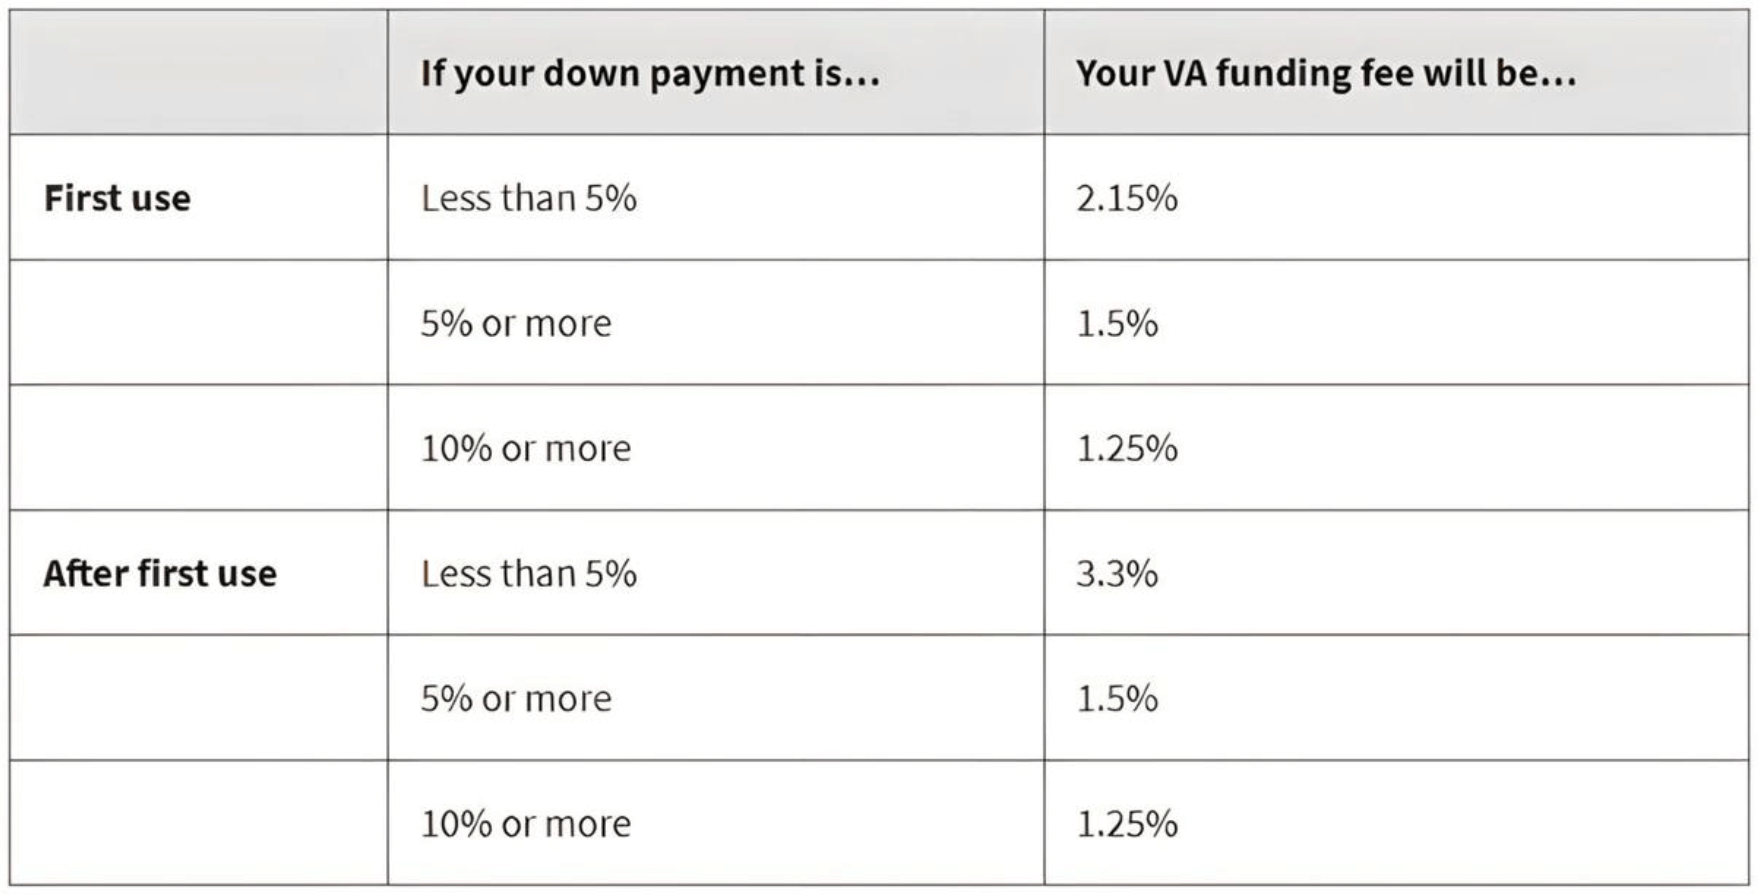 VA funding fee